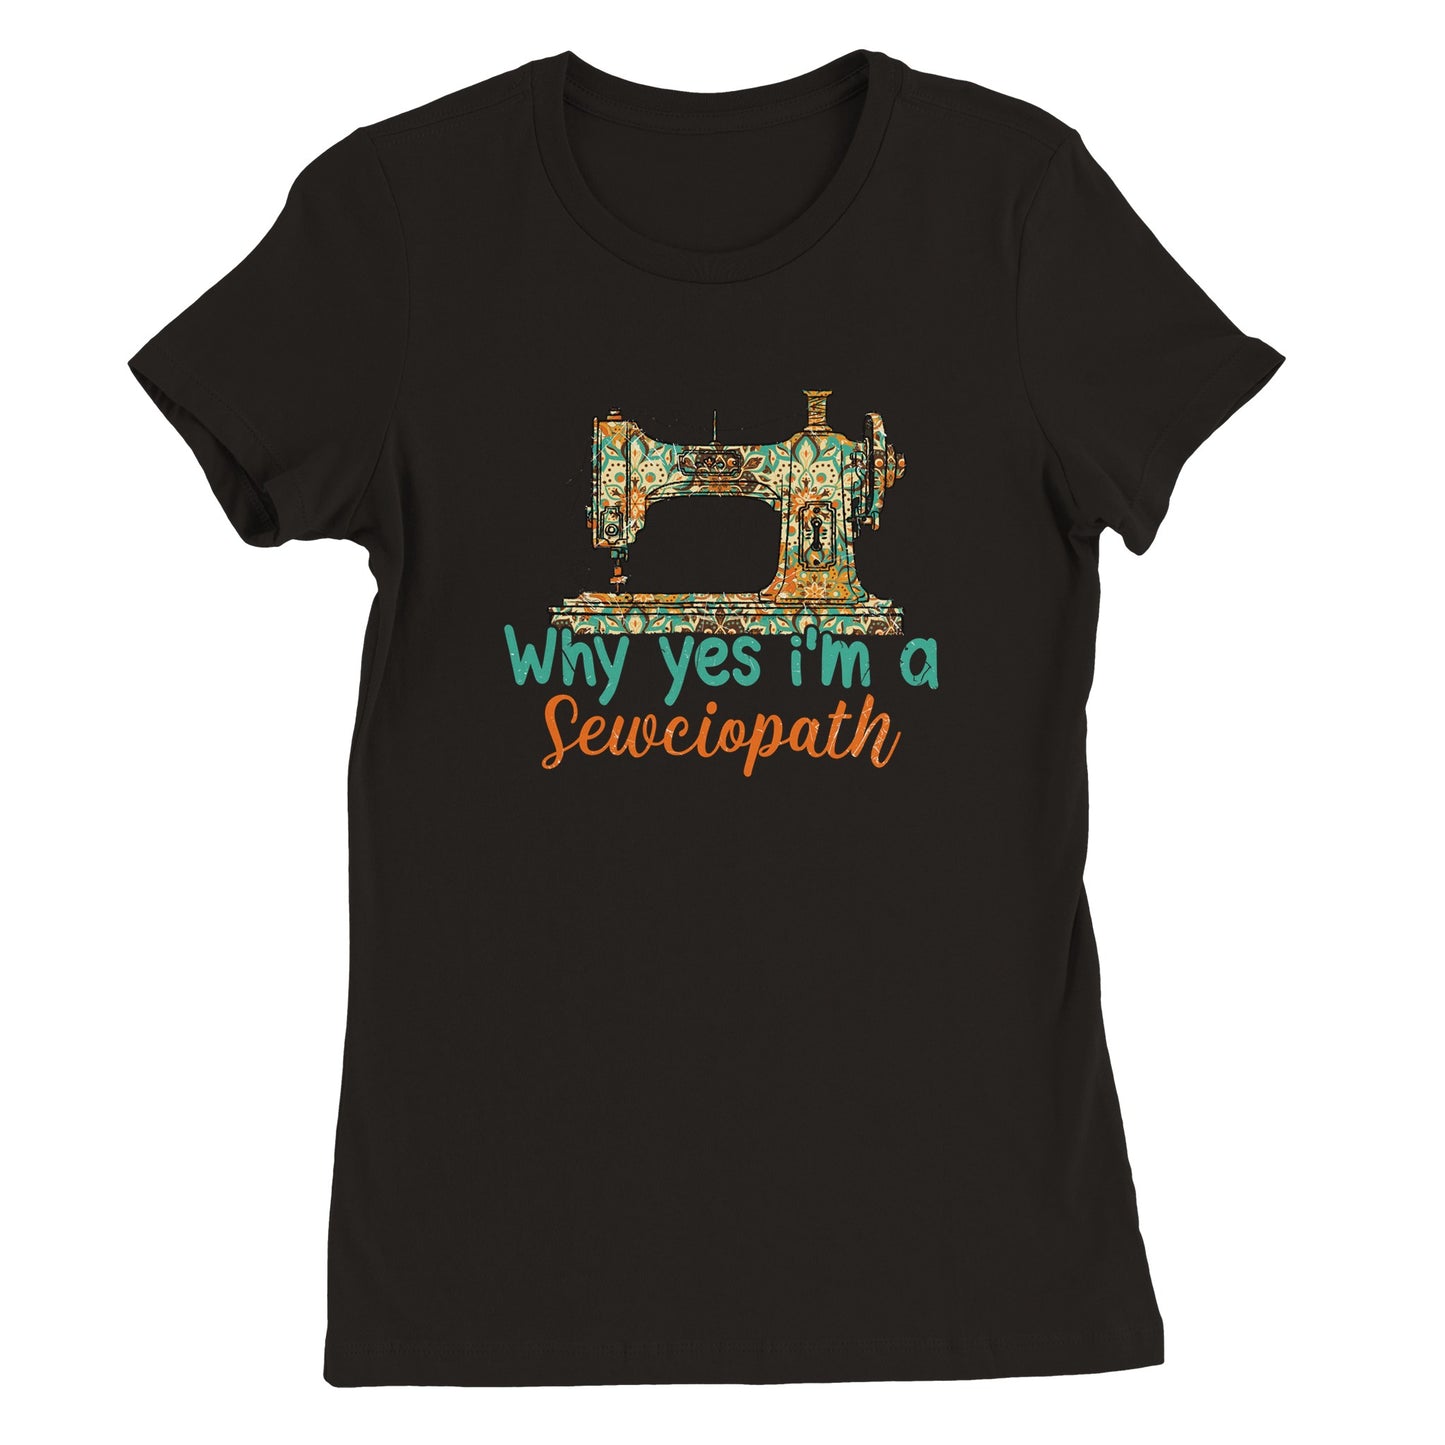 Why Yes I'm a Sewciopath - Premium Women's Crewneck T-shirt